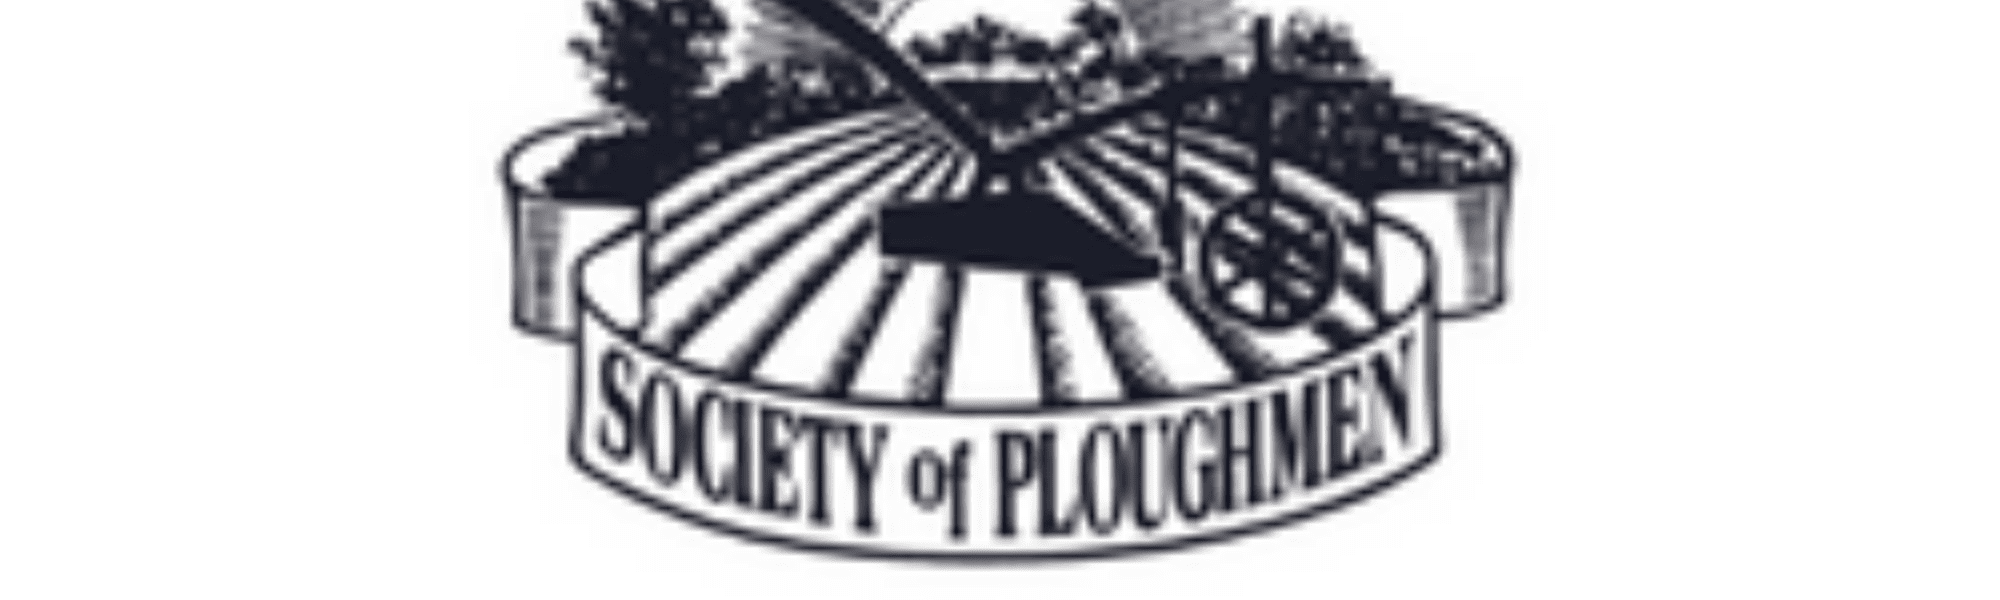 British National Ploughing Championships